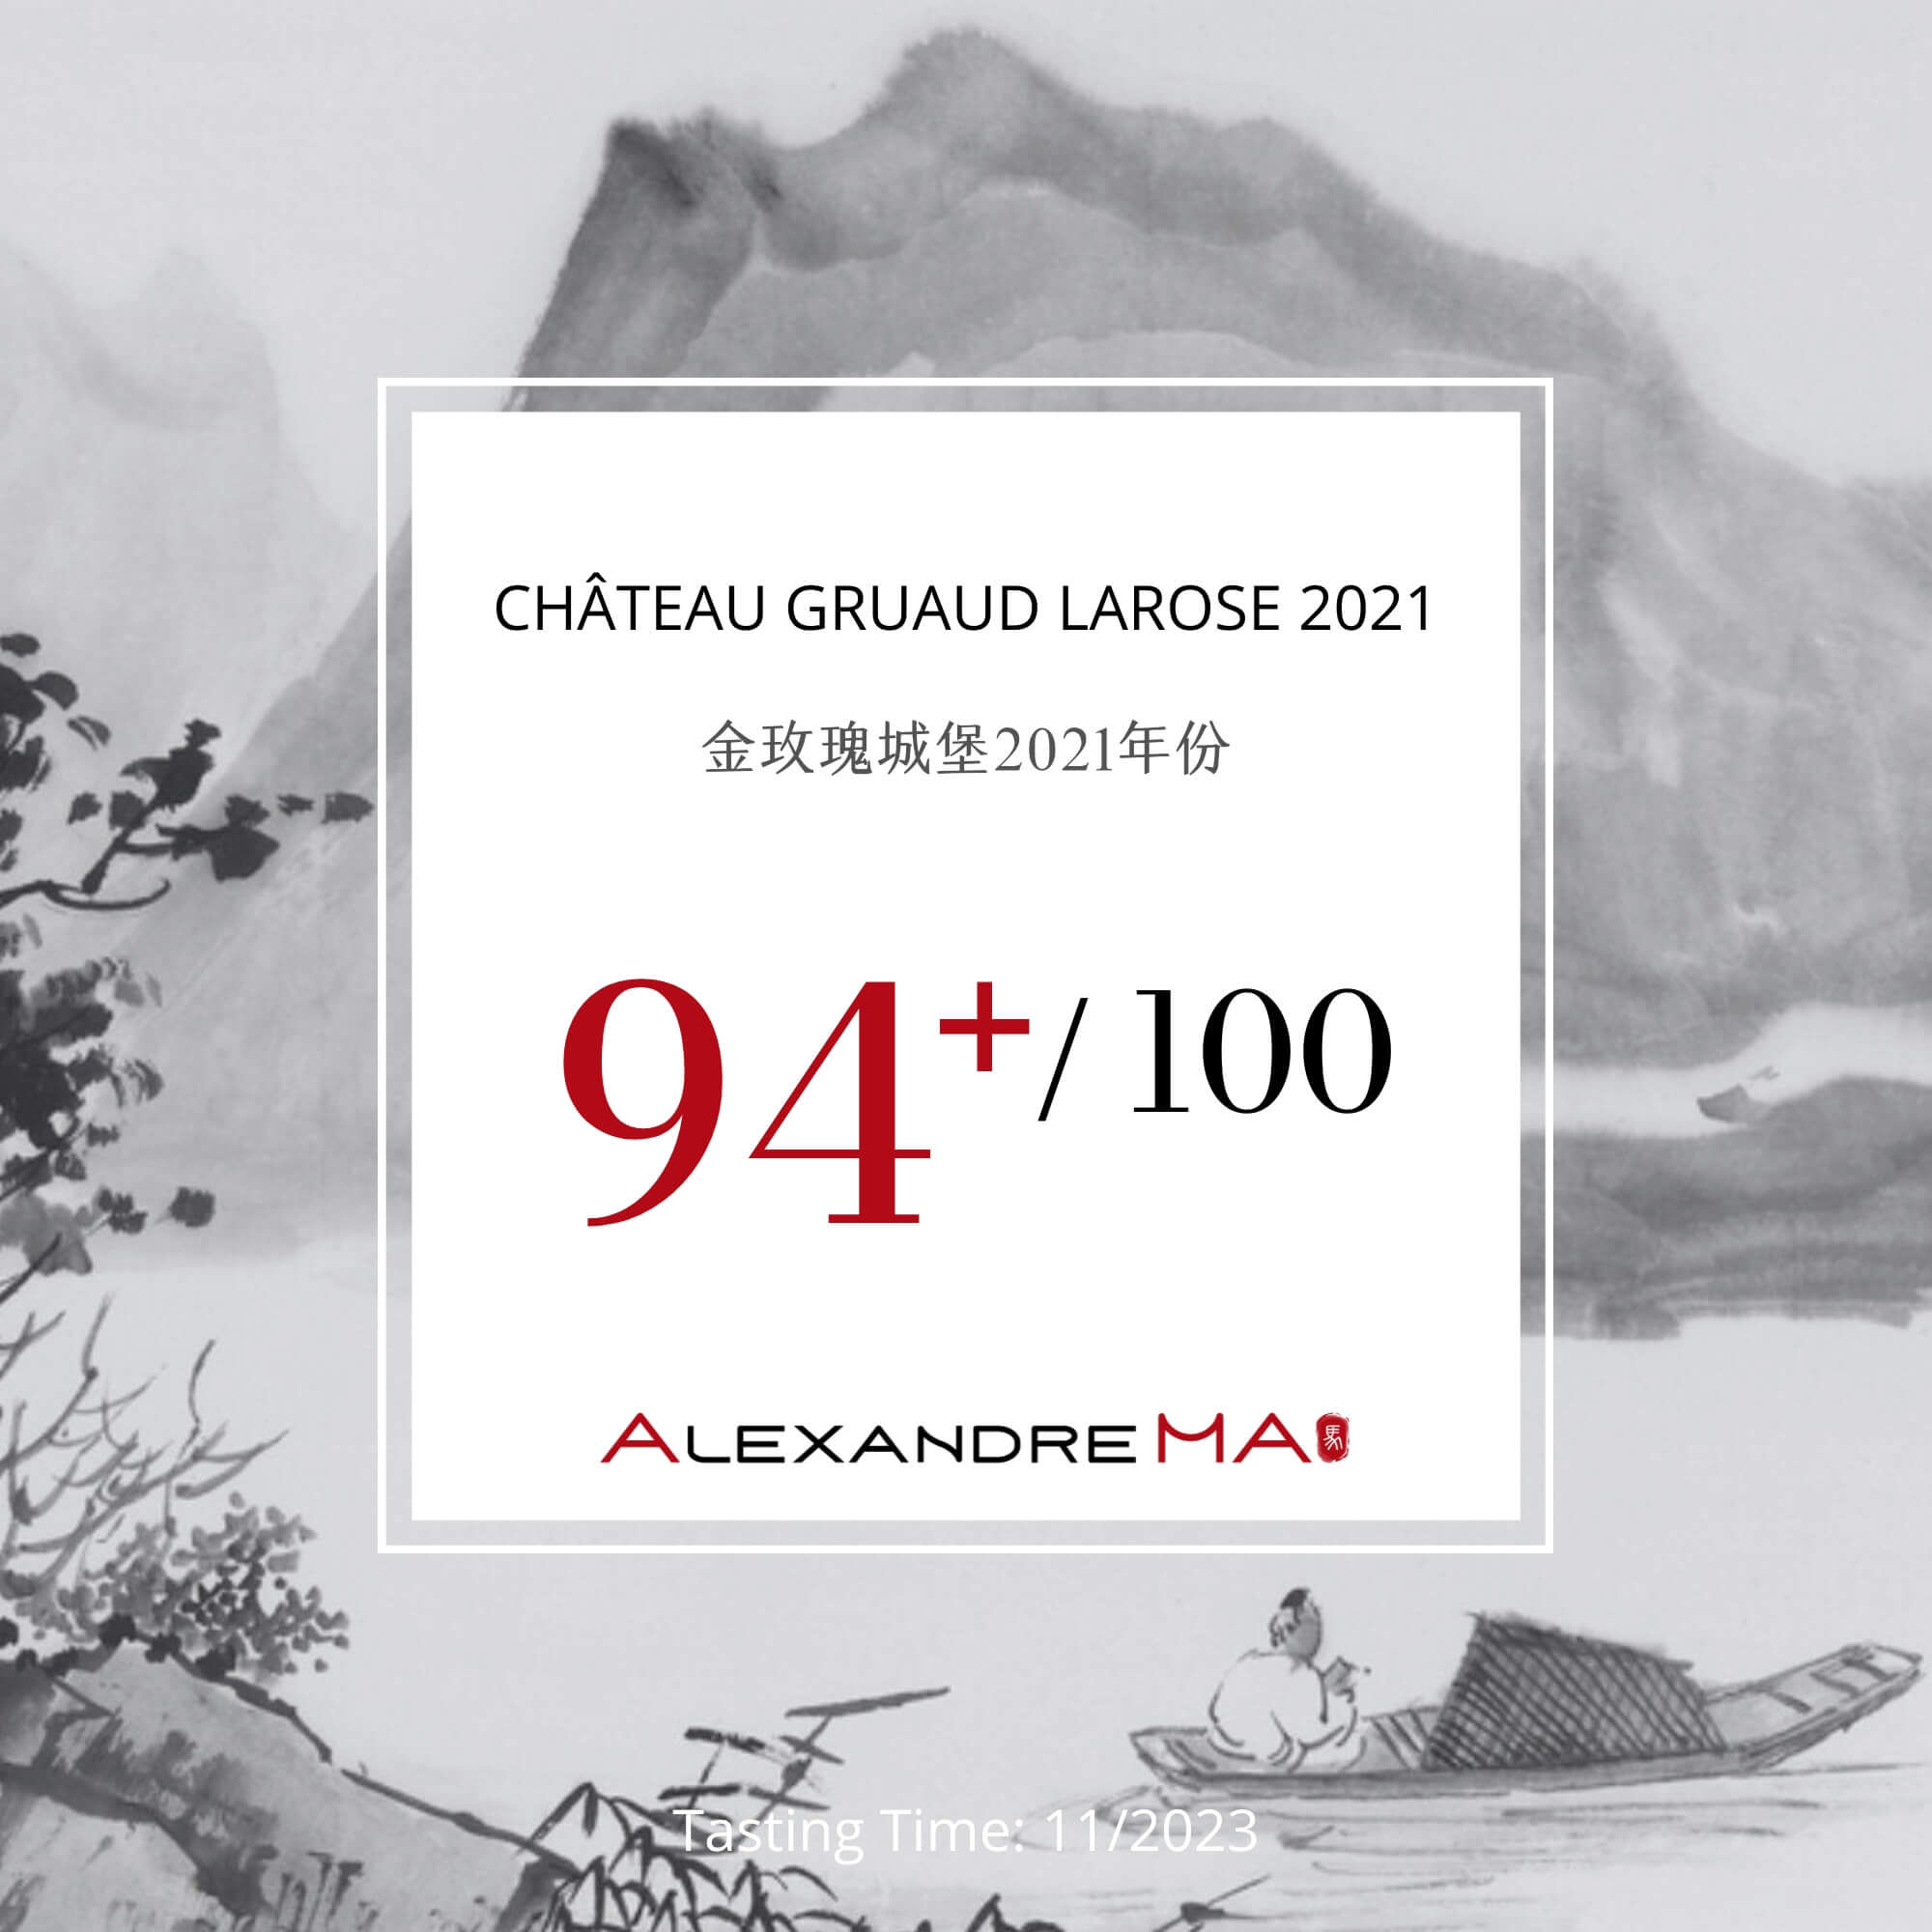 Château Gruaud Larose 2021 - Alexandre MA